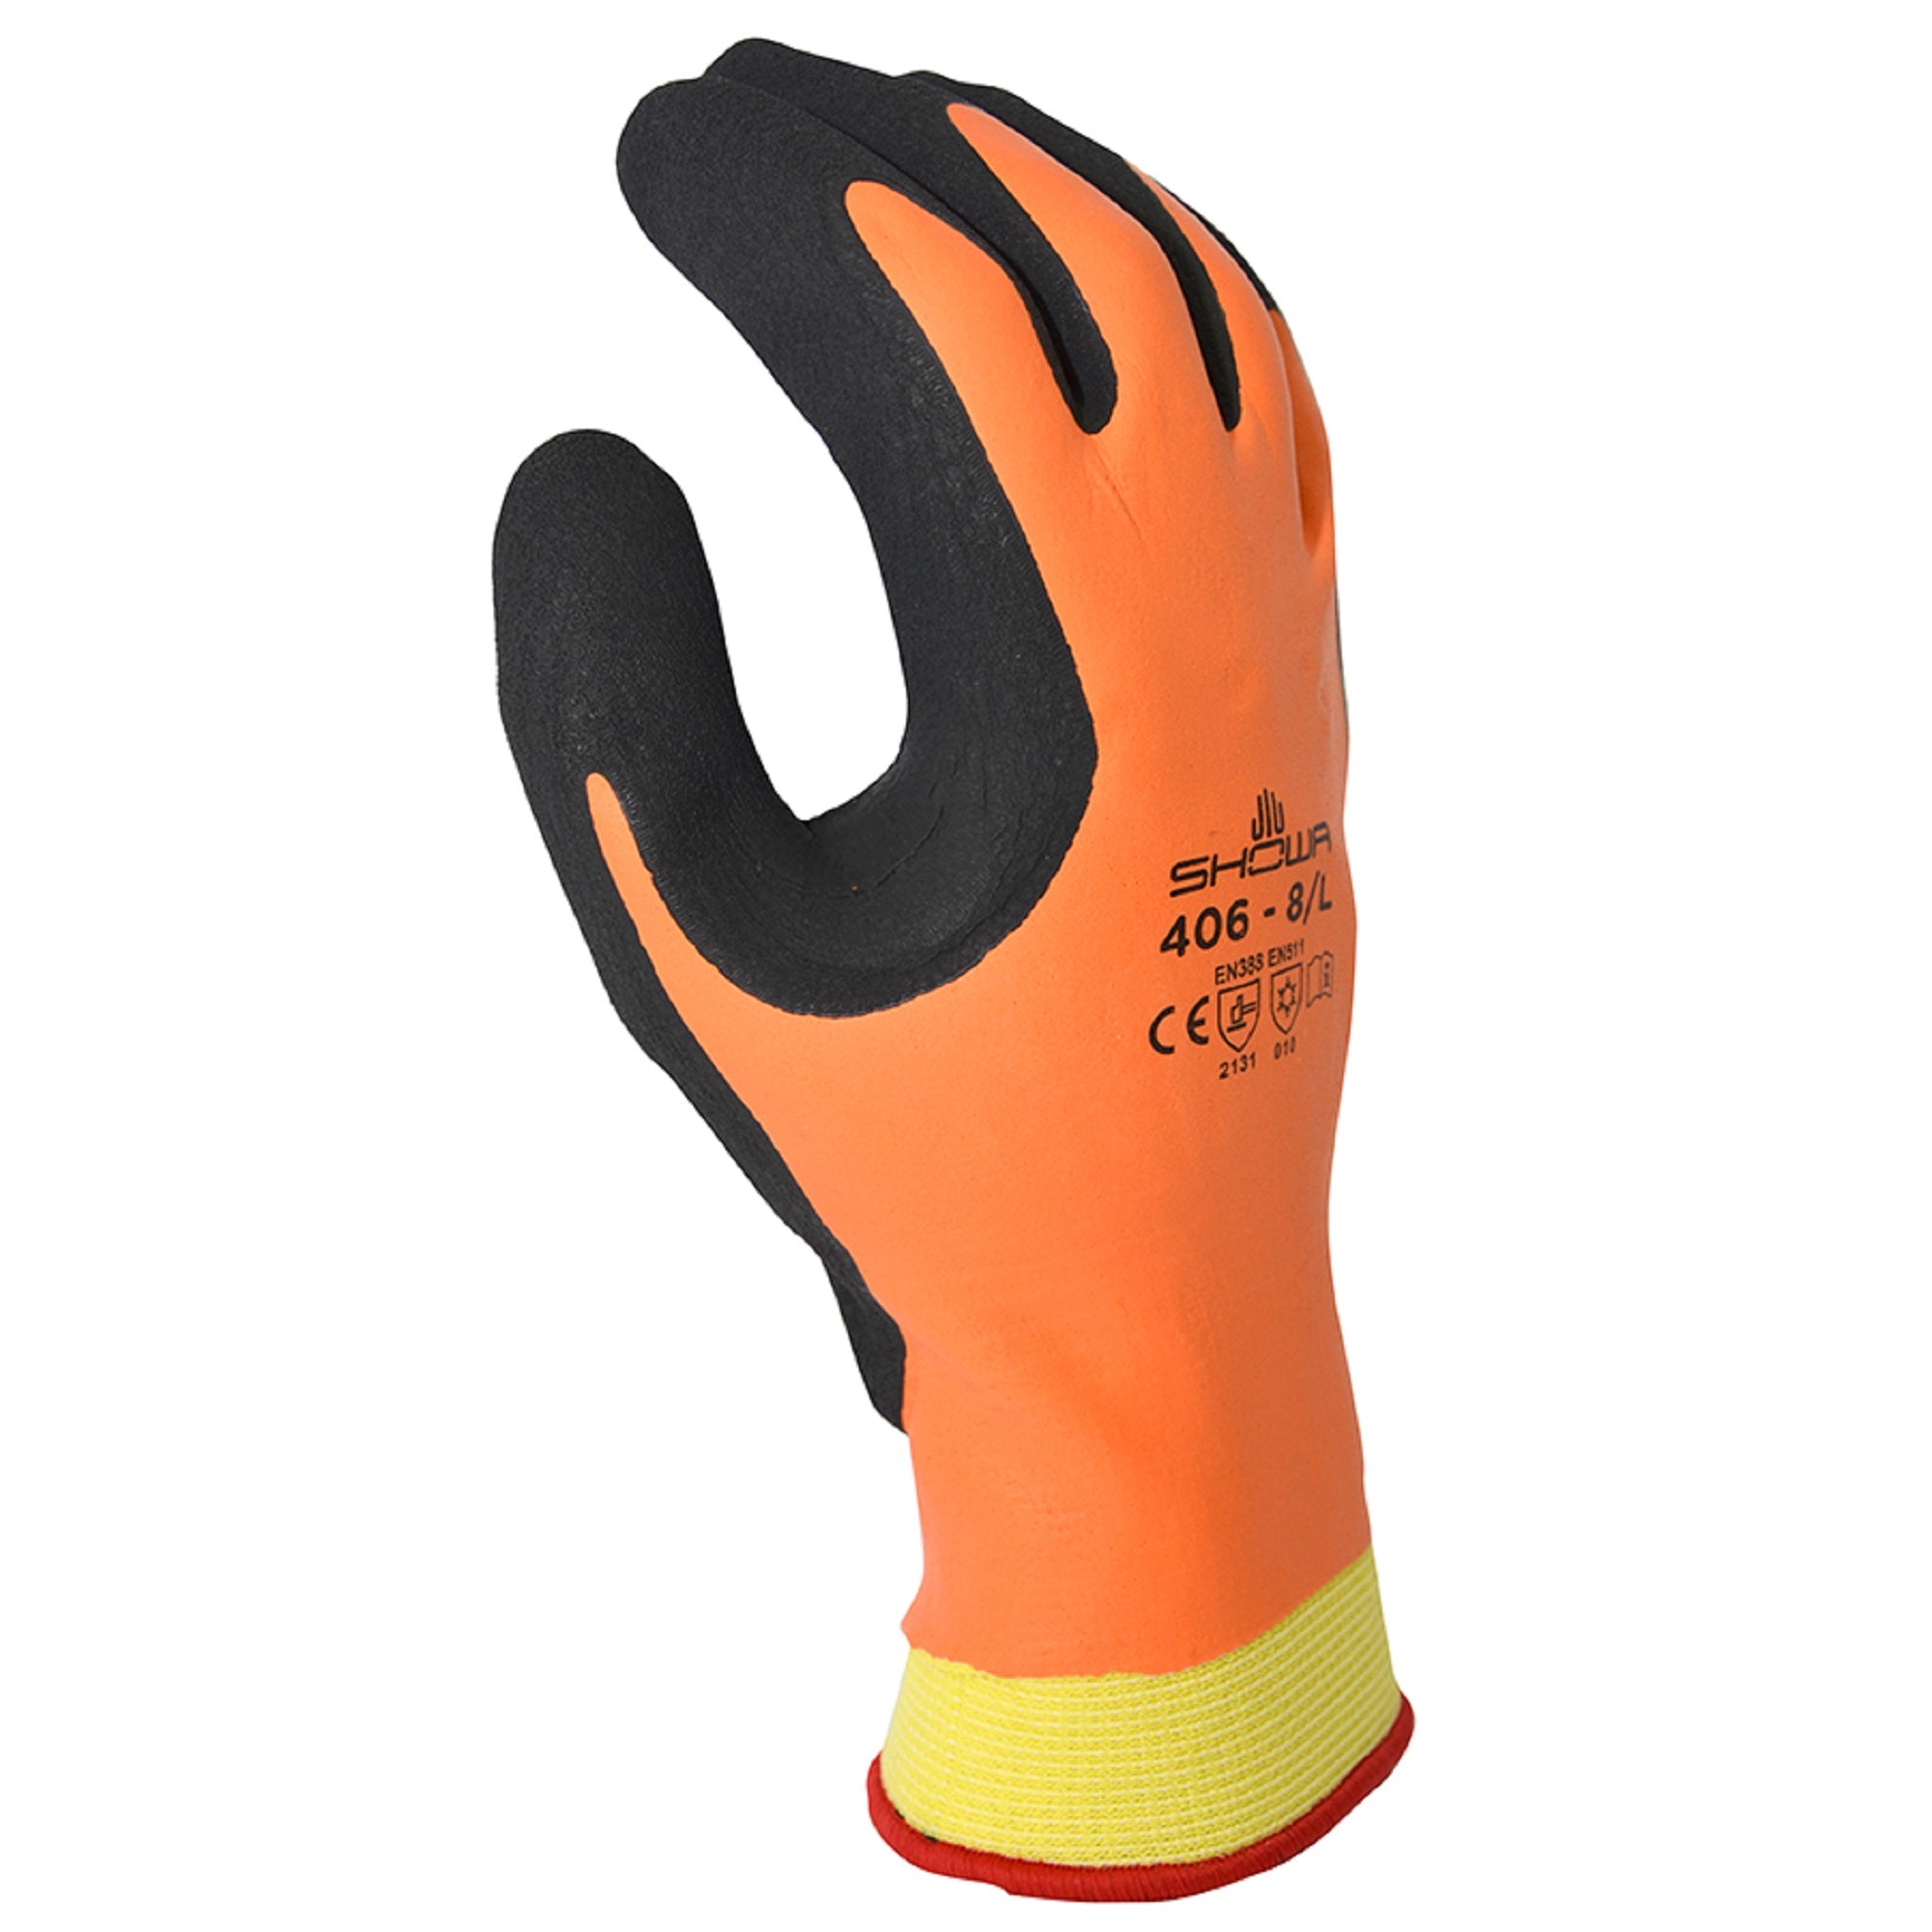 SHOWA 406 Orange Foam Latex Thermal Lined Gloves